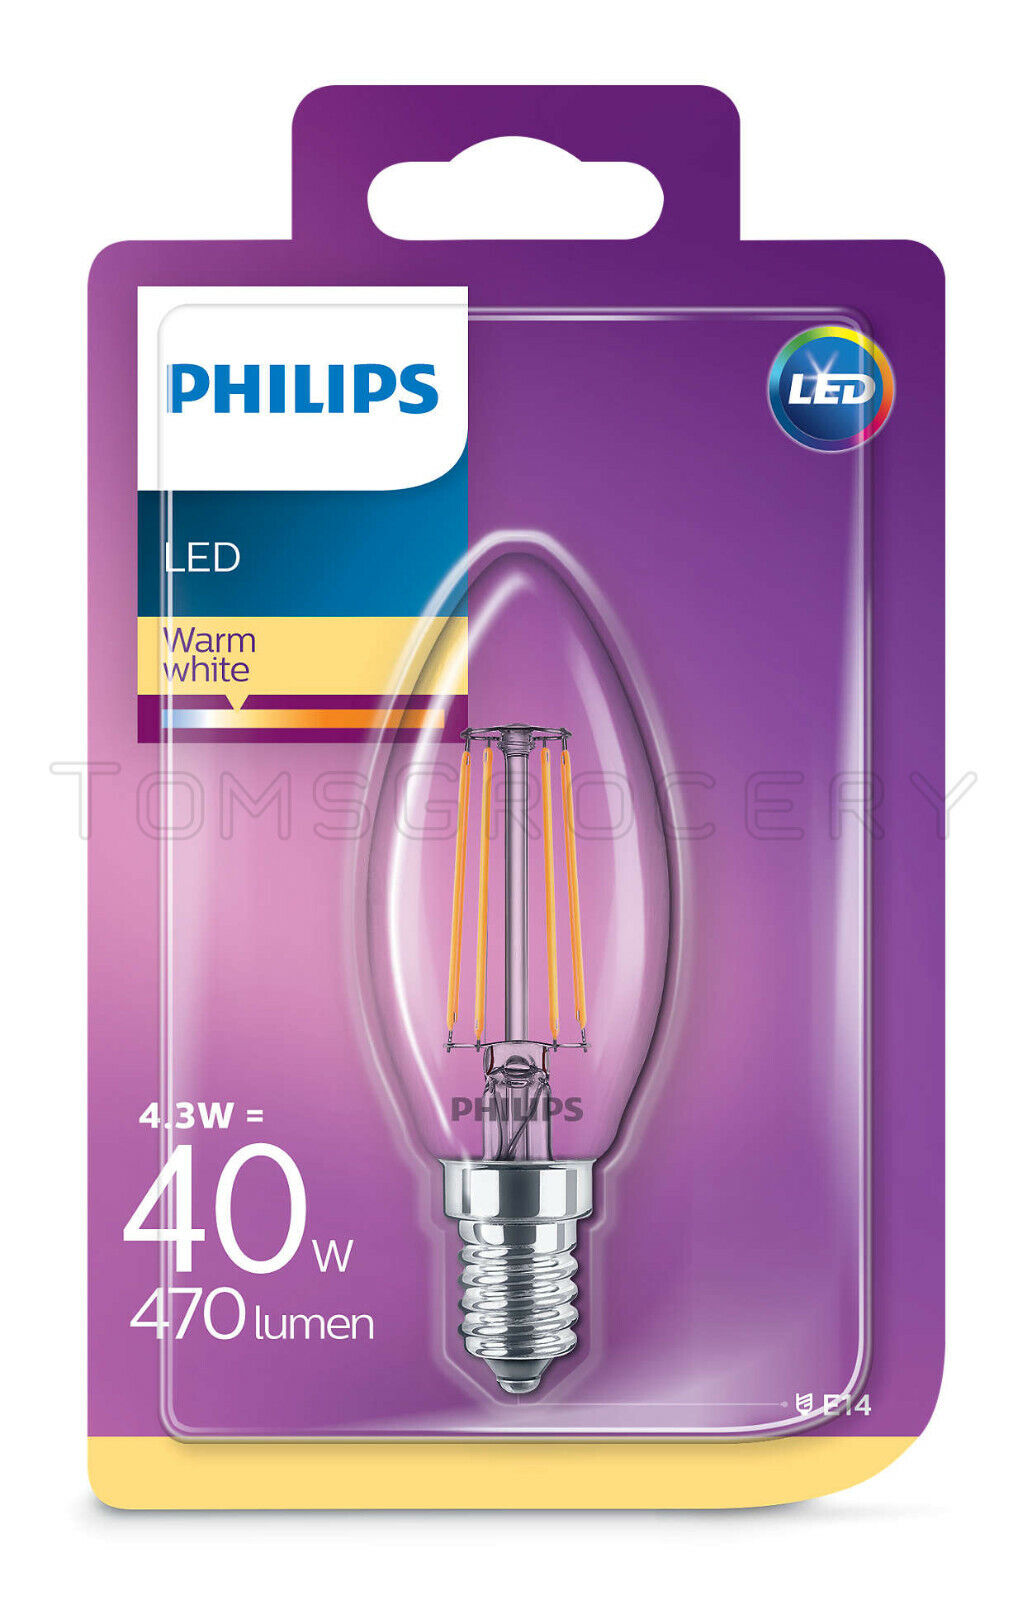 Onderwijs Dekbed Iedereen 2 x Philips LED Deco E14 4.3W 40W B35 Vintage Candle Bulbs Warm White A++  8718696587355 | eBay